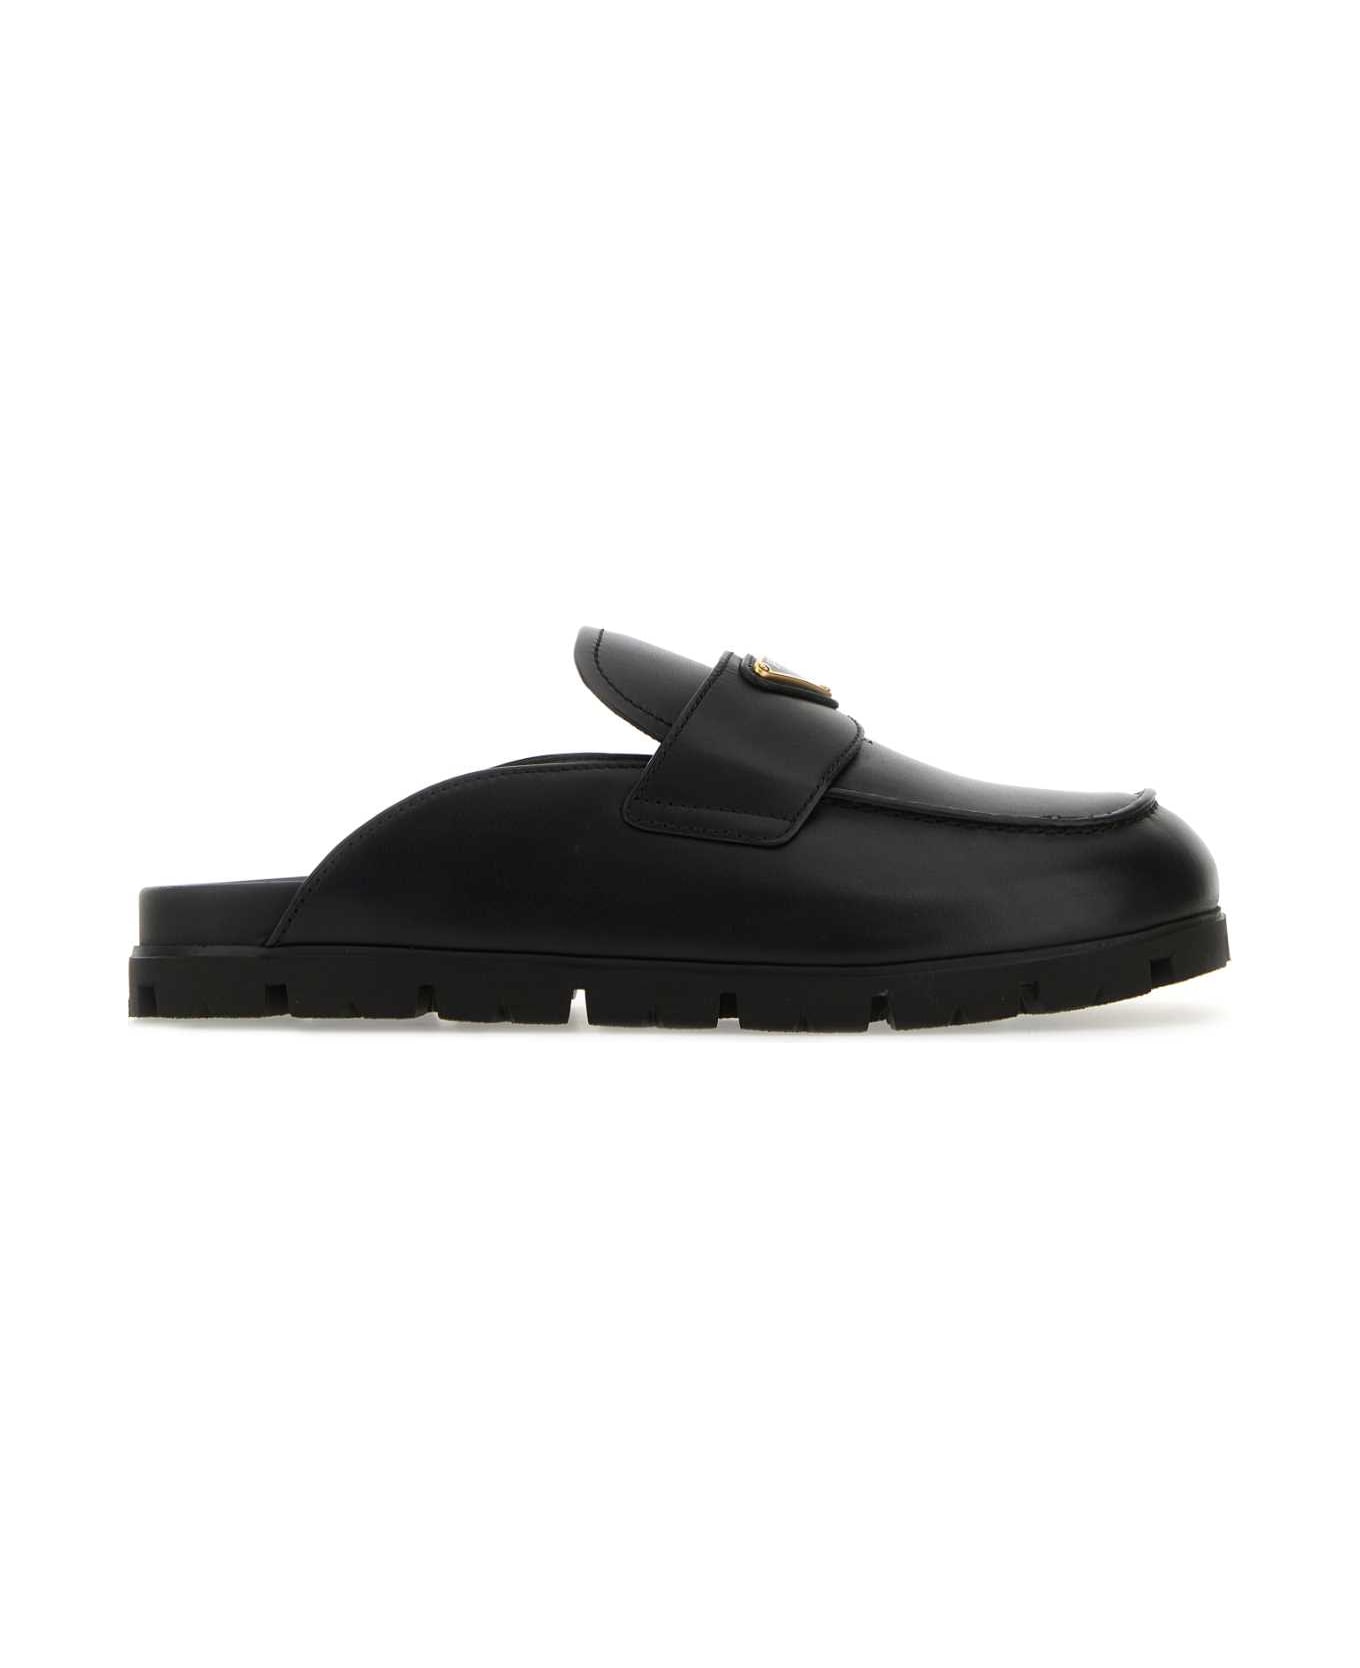 Prada Black Leather Slippers - NERO